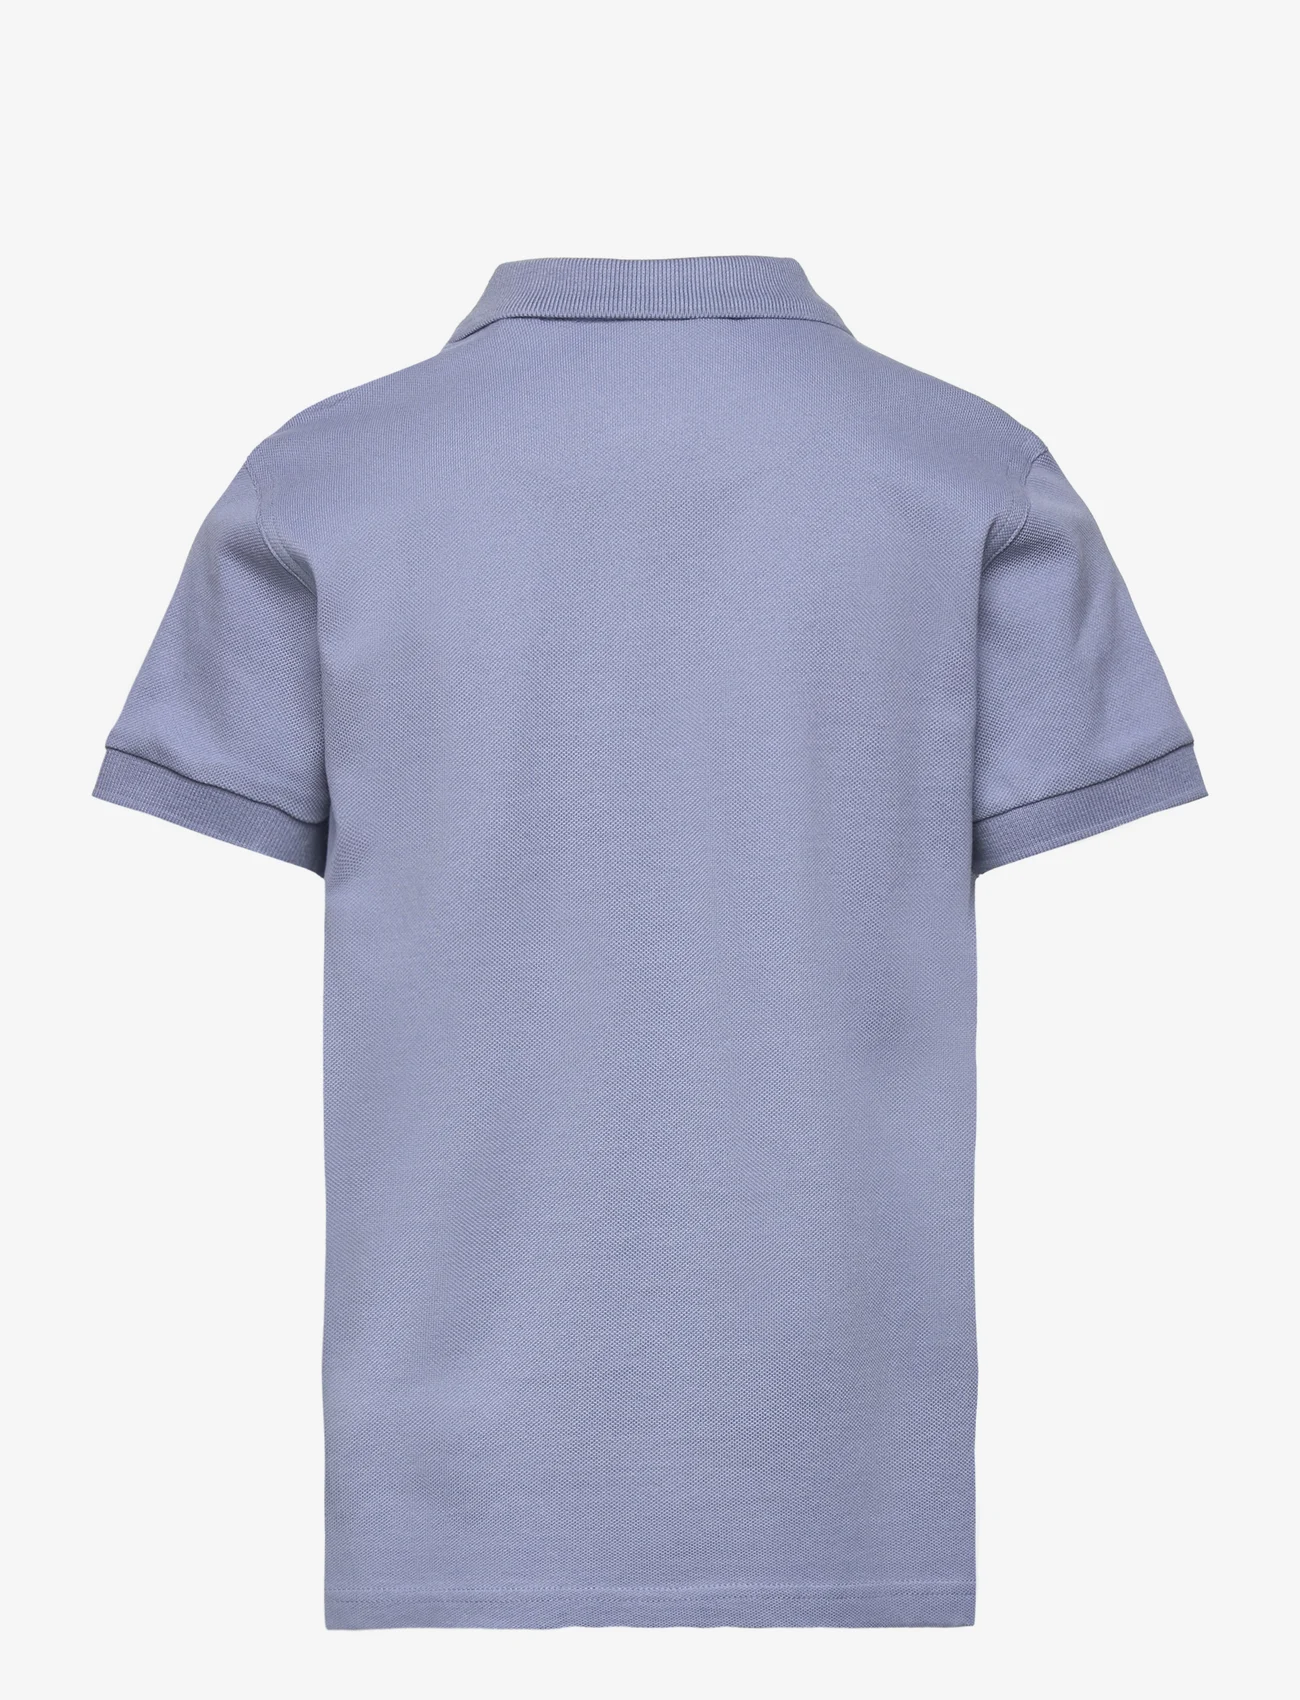 GANT - SHIELD SS PIQUE - polo shirts - muscari blue - 1